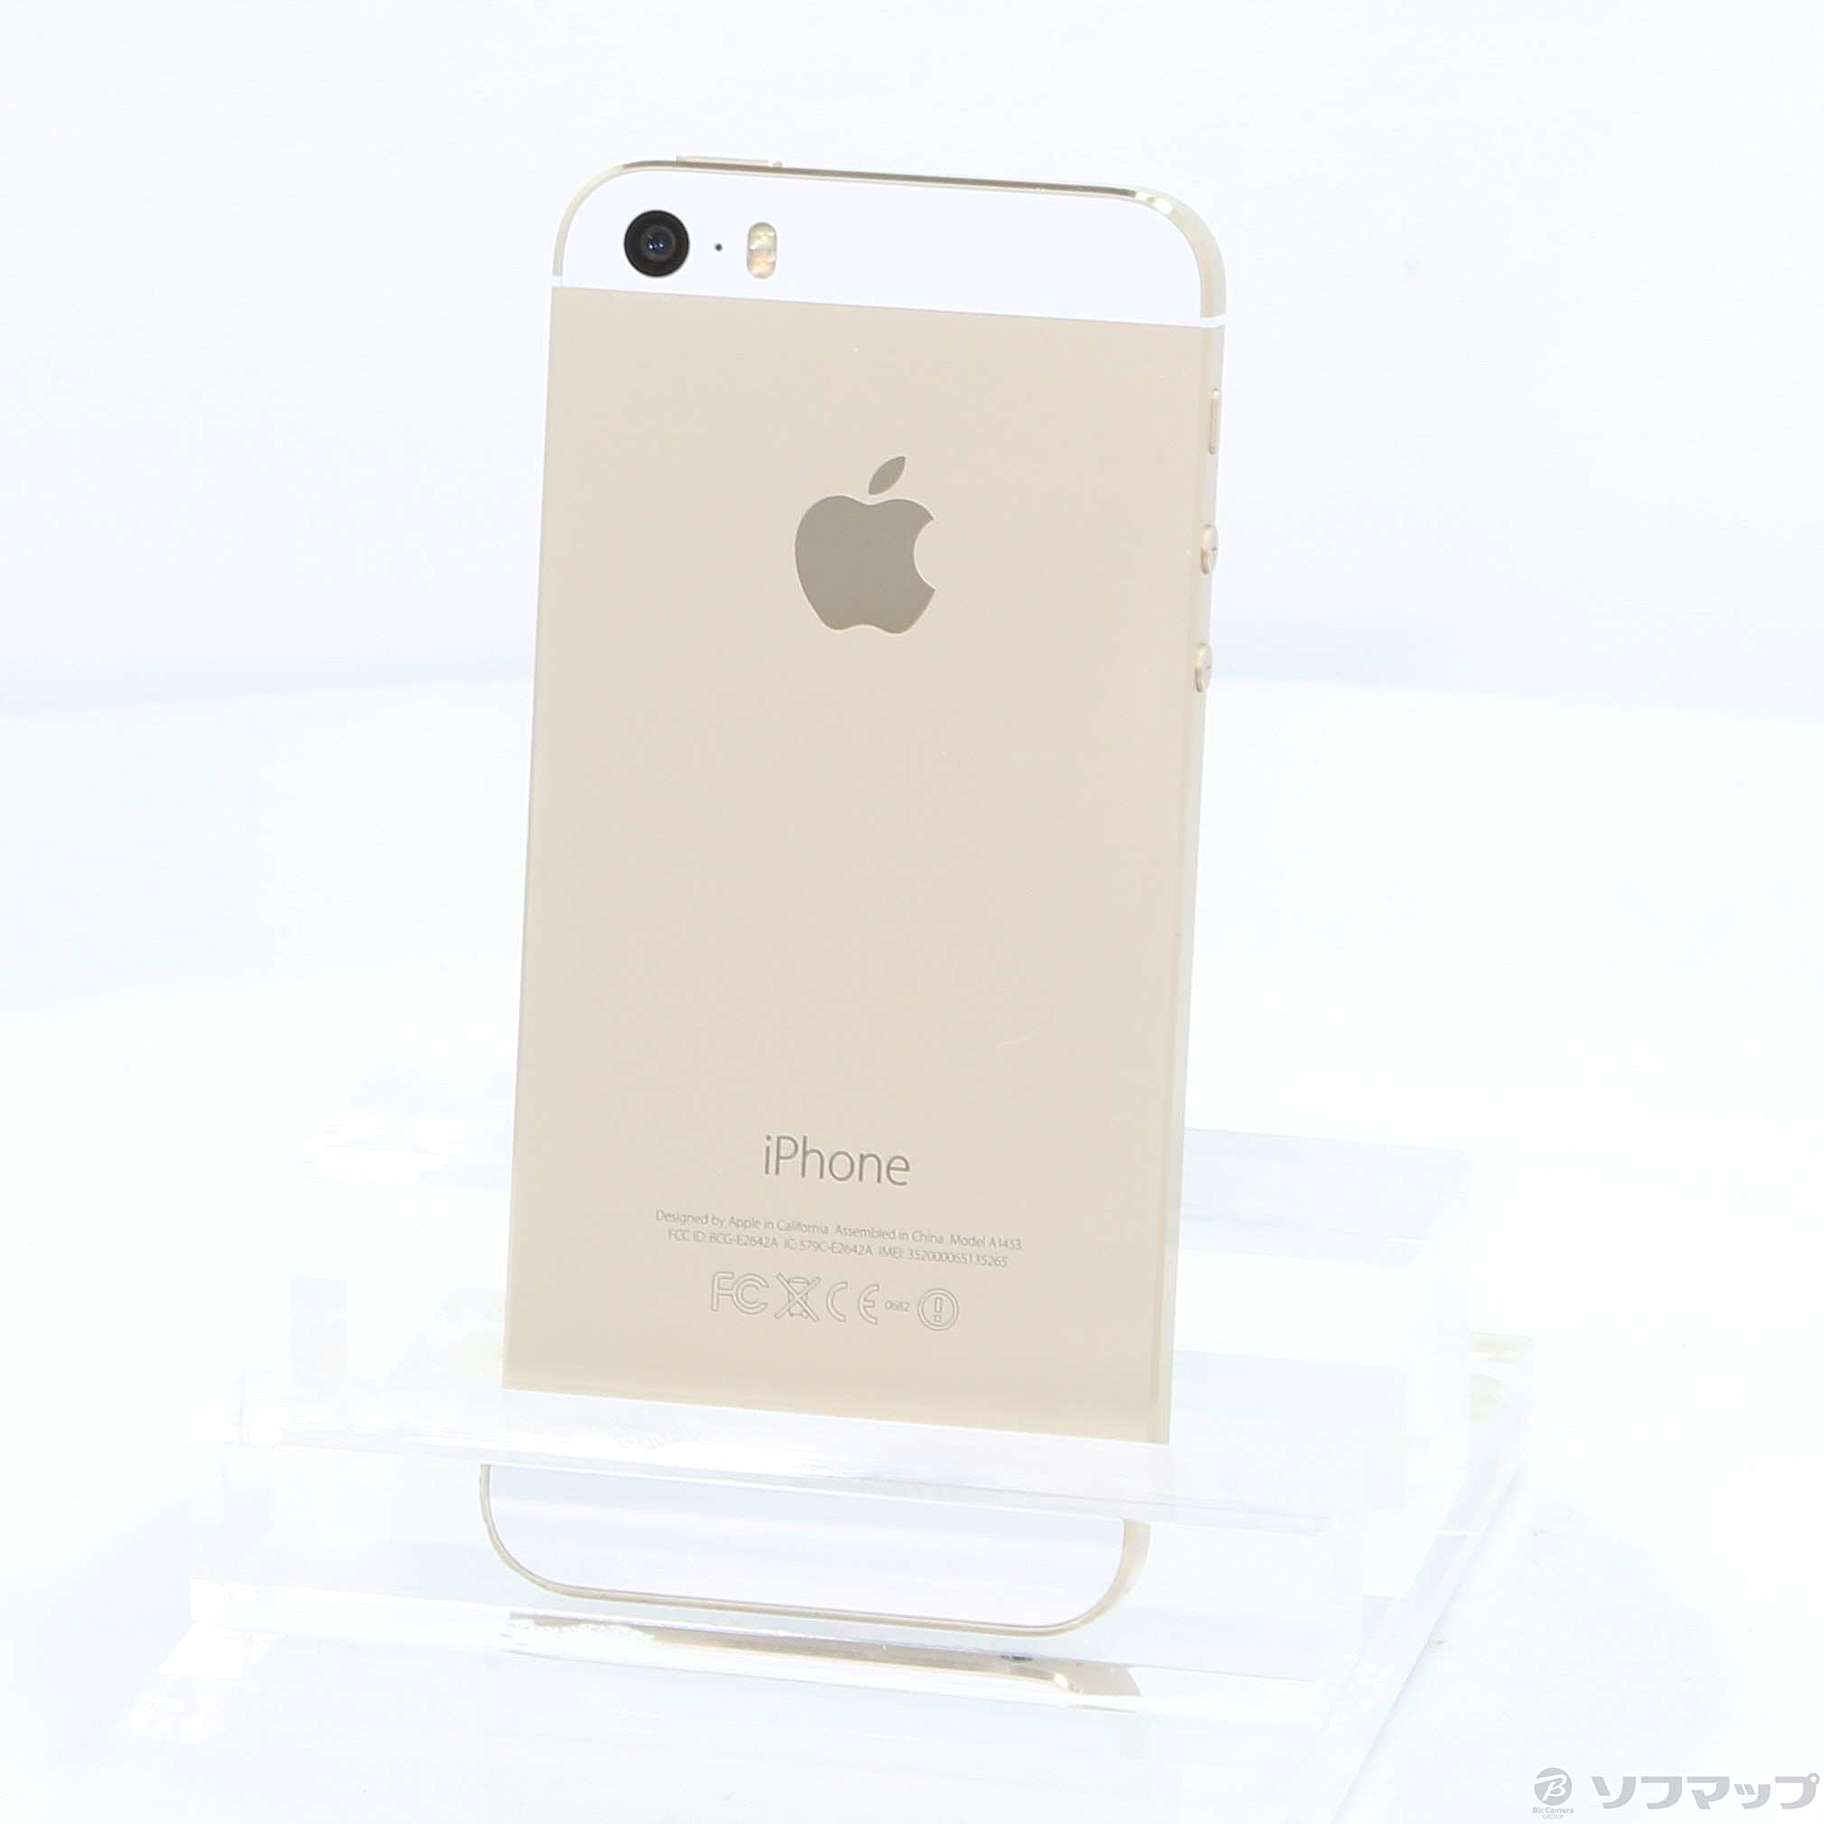 iPhone 5s Gold 16 GB Apple スマートフォン